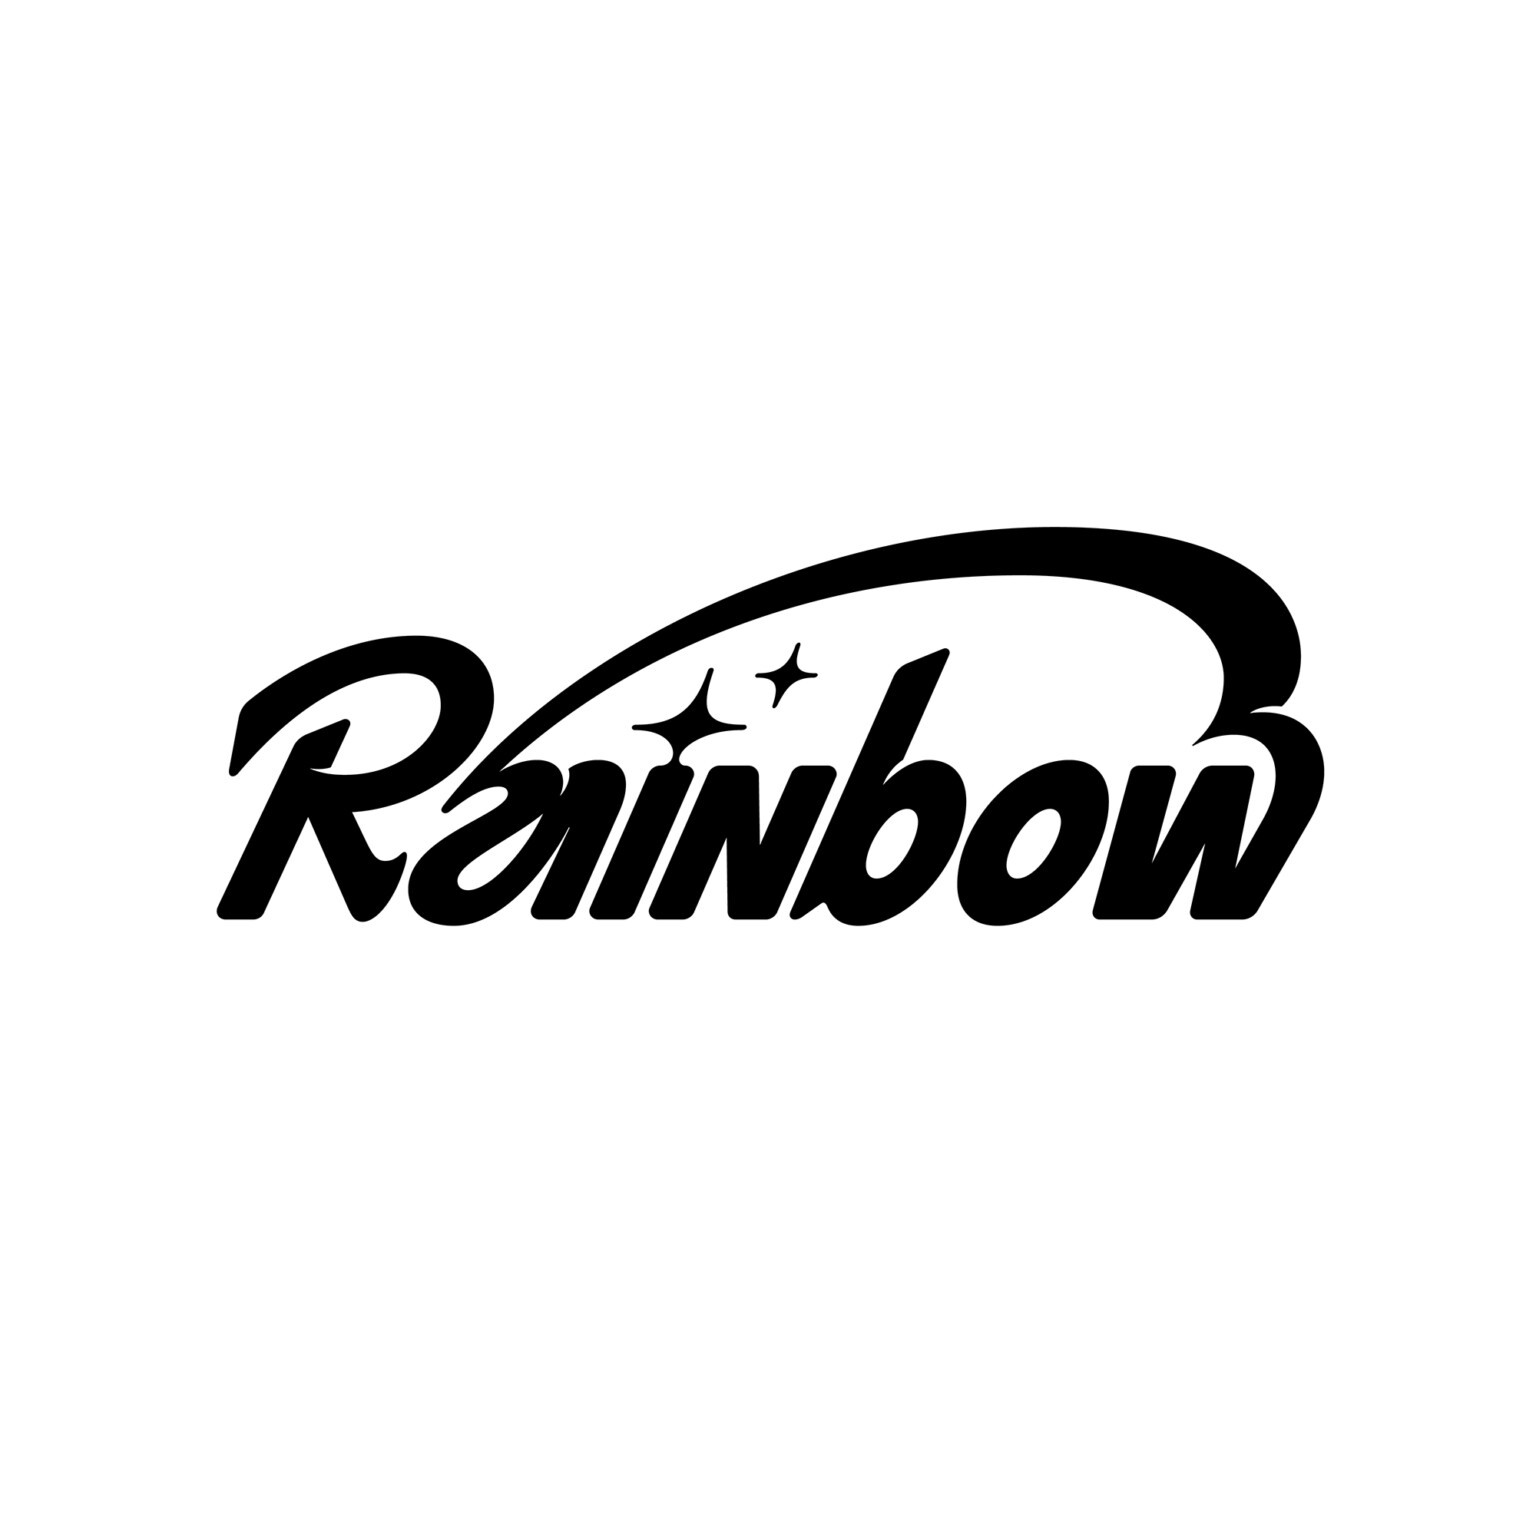 vr_logotypes_year001_rainbow-1536x1536.jpg